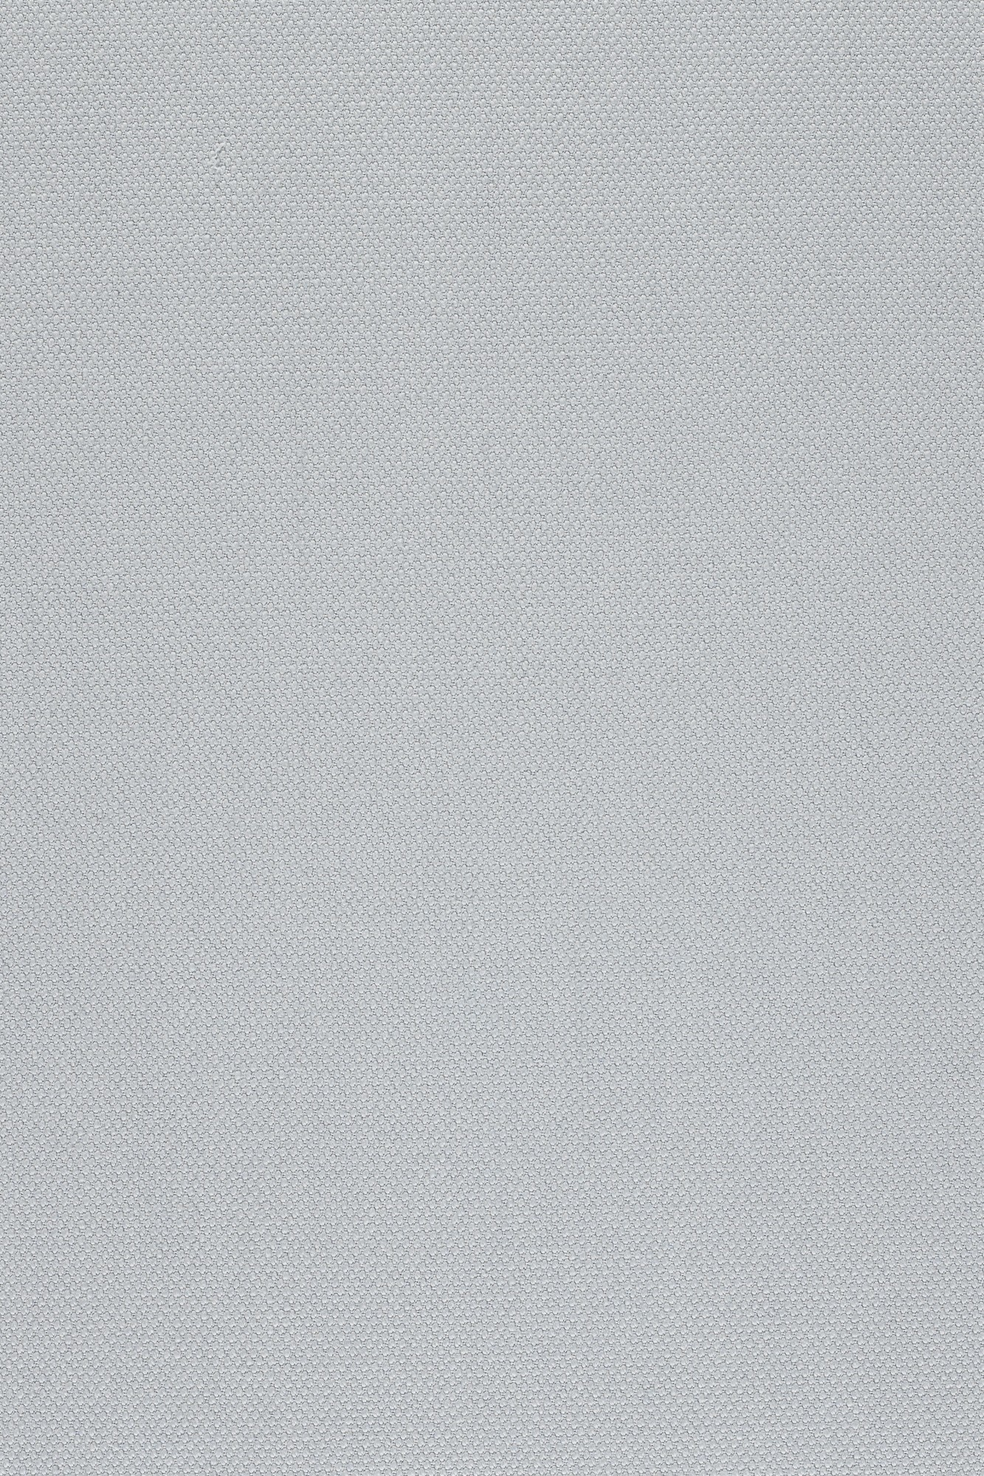 Fabric sample Steelcut 2 140 grey